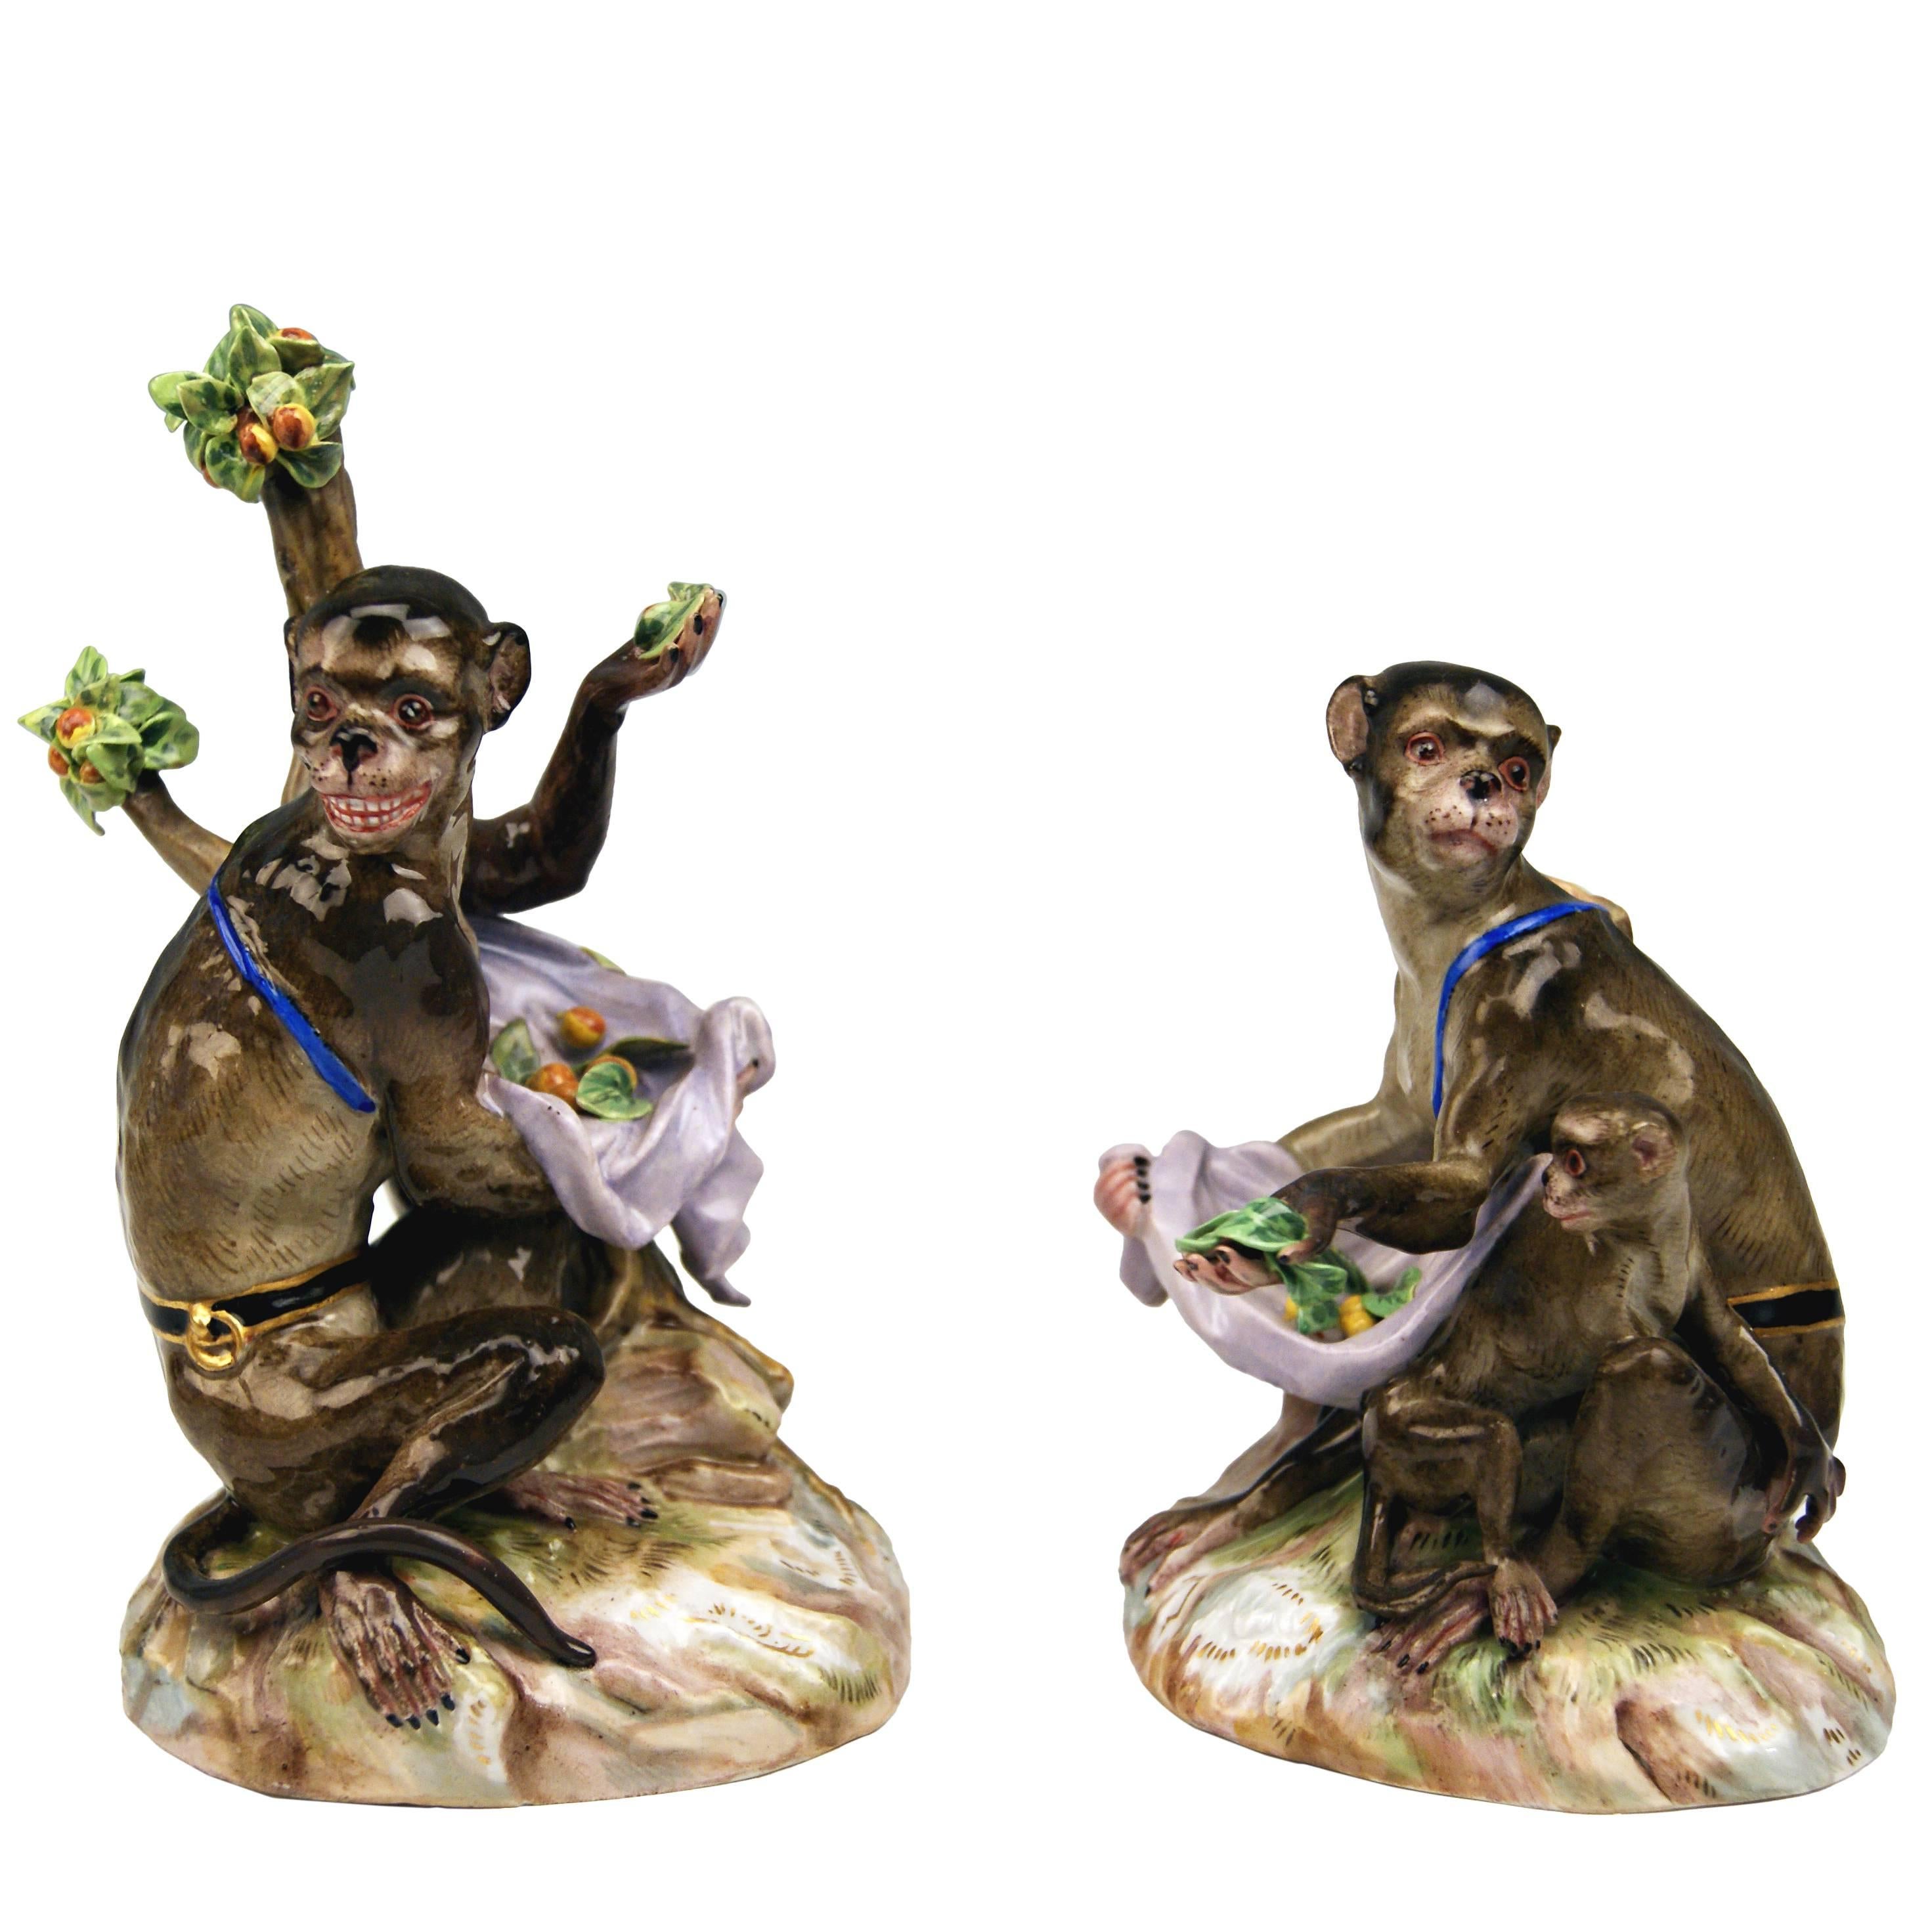 Pair Meissen Nicest Monkey Figurines by Kaendler Models 1464 and 1469, circa 1850